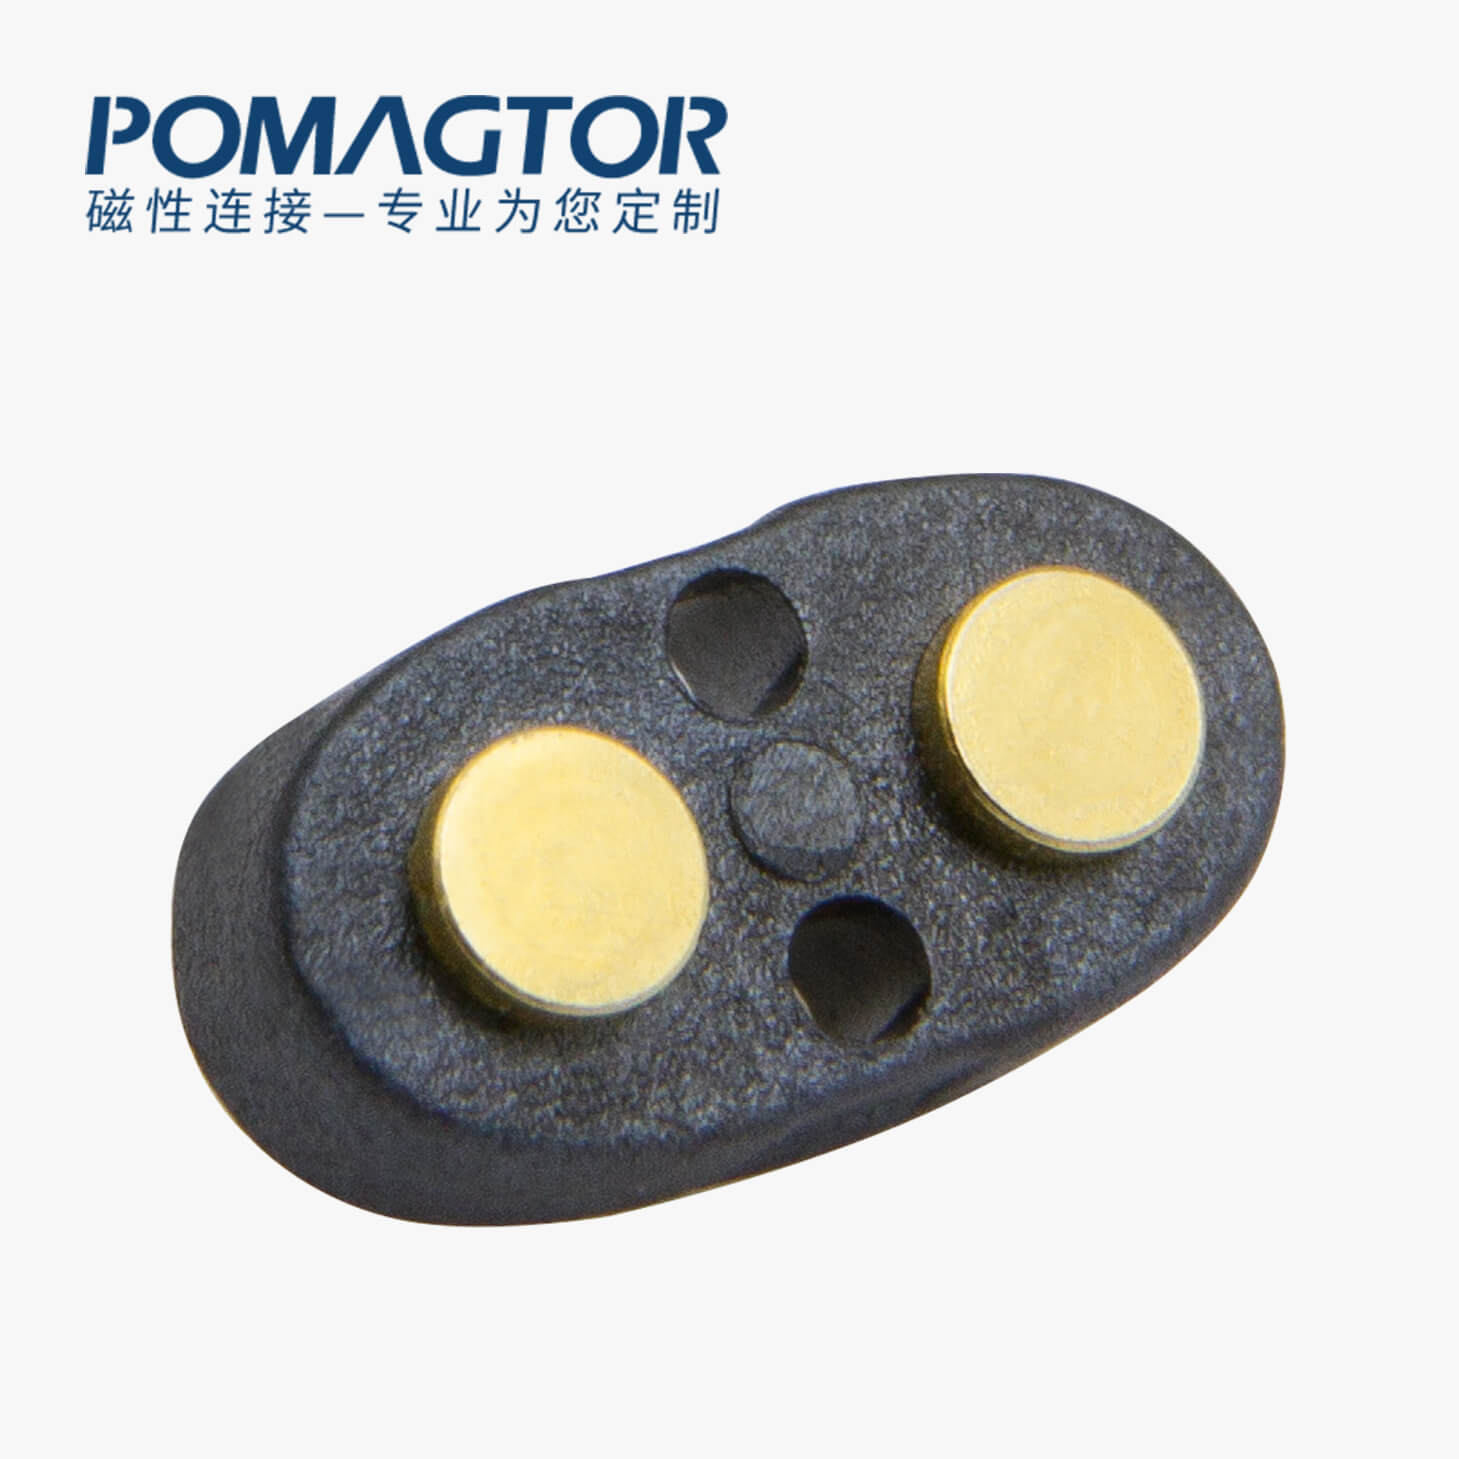 POGO PIN连接器 SMT式：2PIN，电镀黄铜Au1u，电压12V，电流1.2A，工作行程0.95mm:150gfMax，弹力30000次+，工作温度-30°~85°